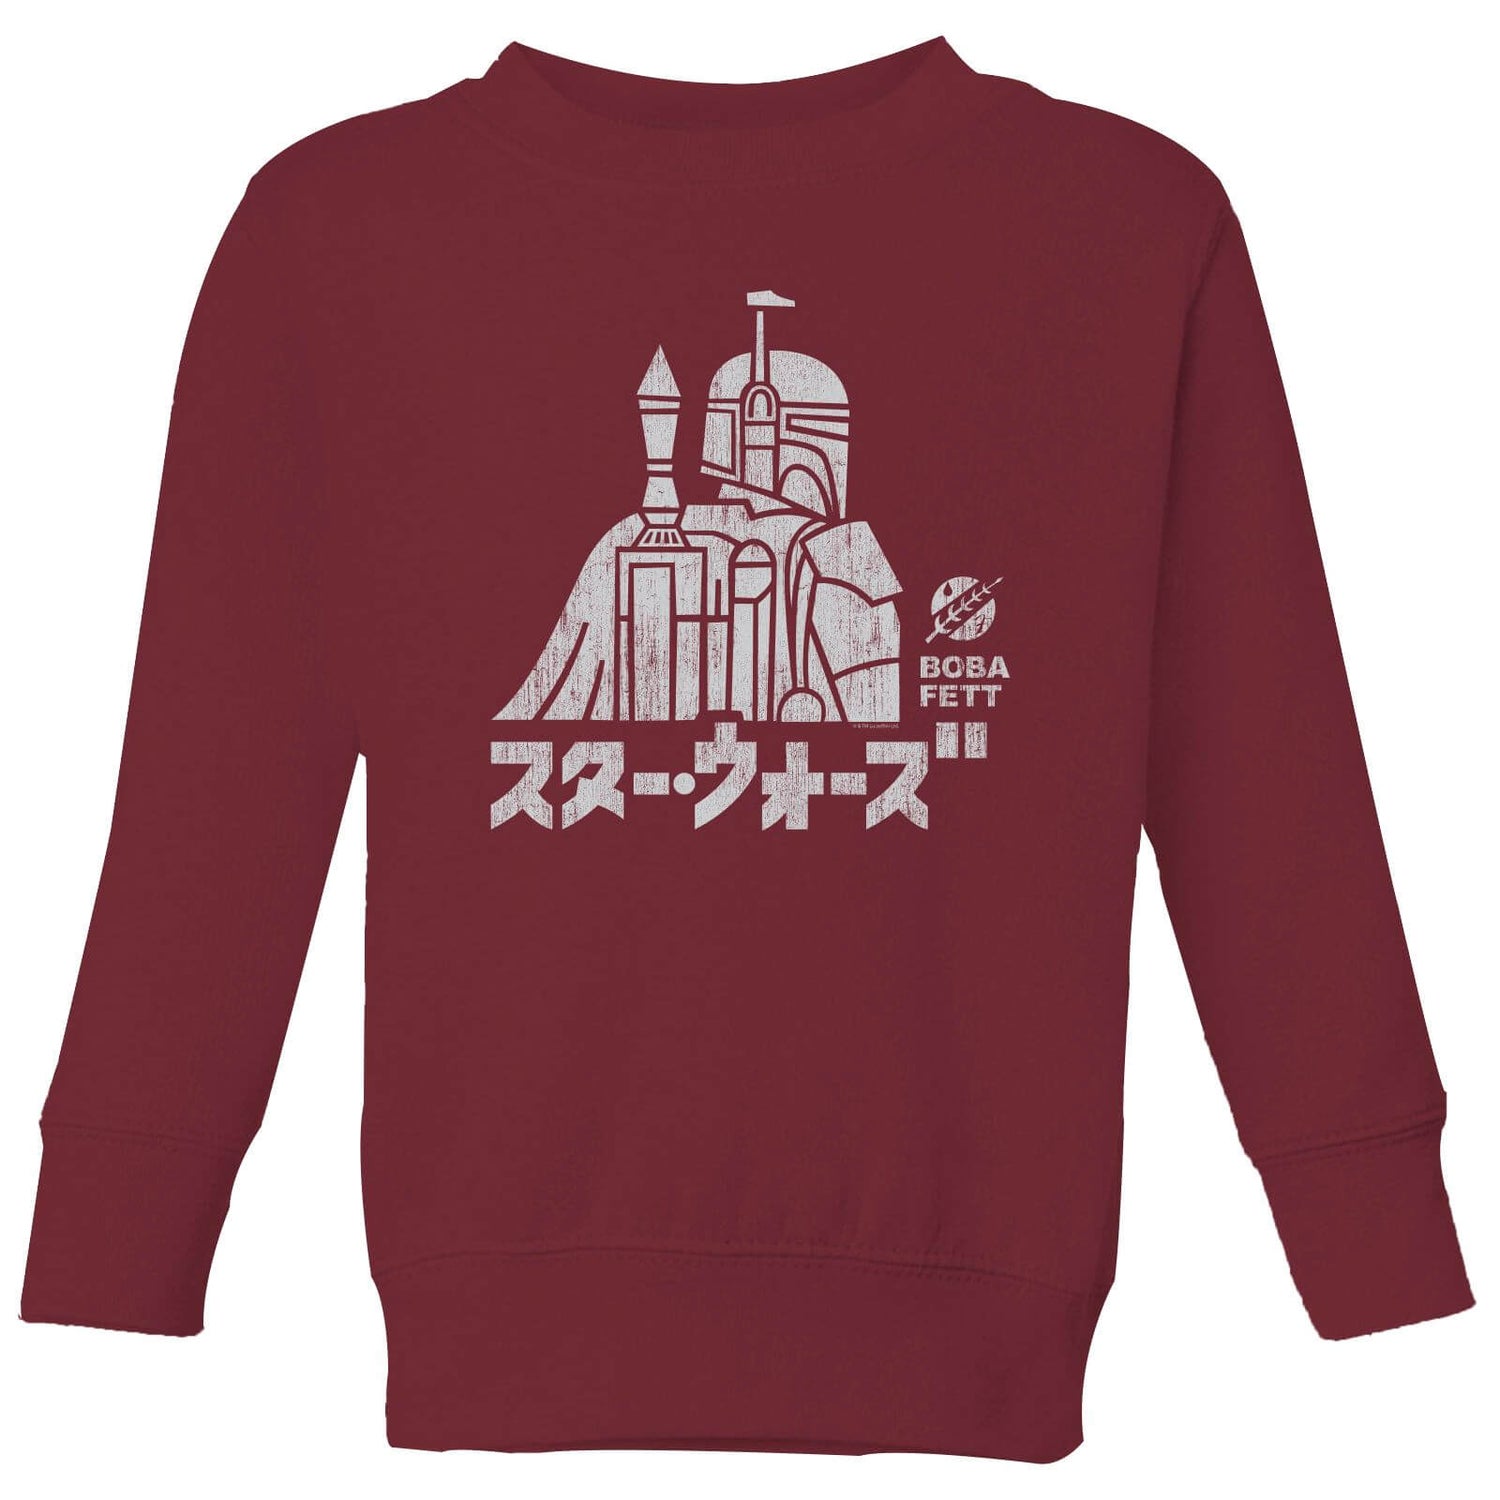 Star Wars Kana Boba Fett Kids' Sweatshirt - Burgundy